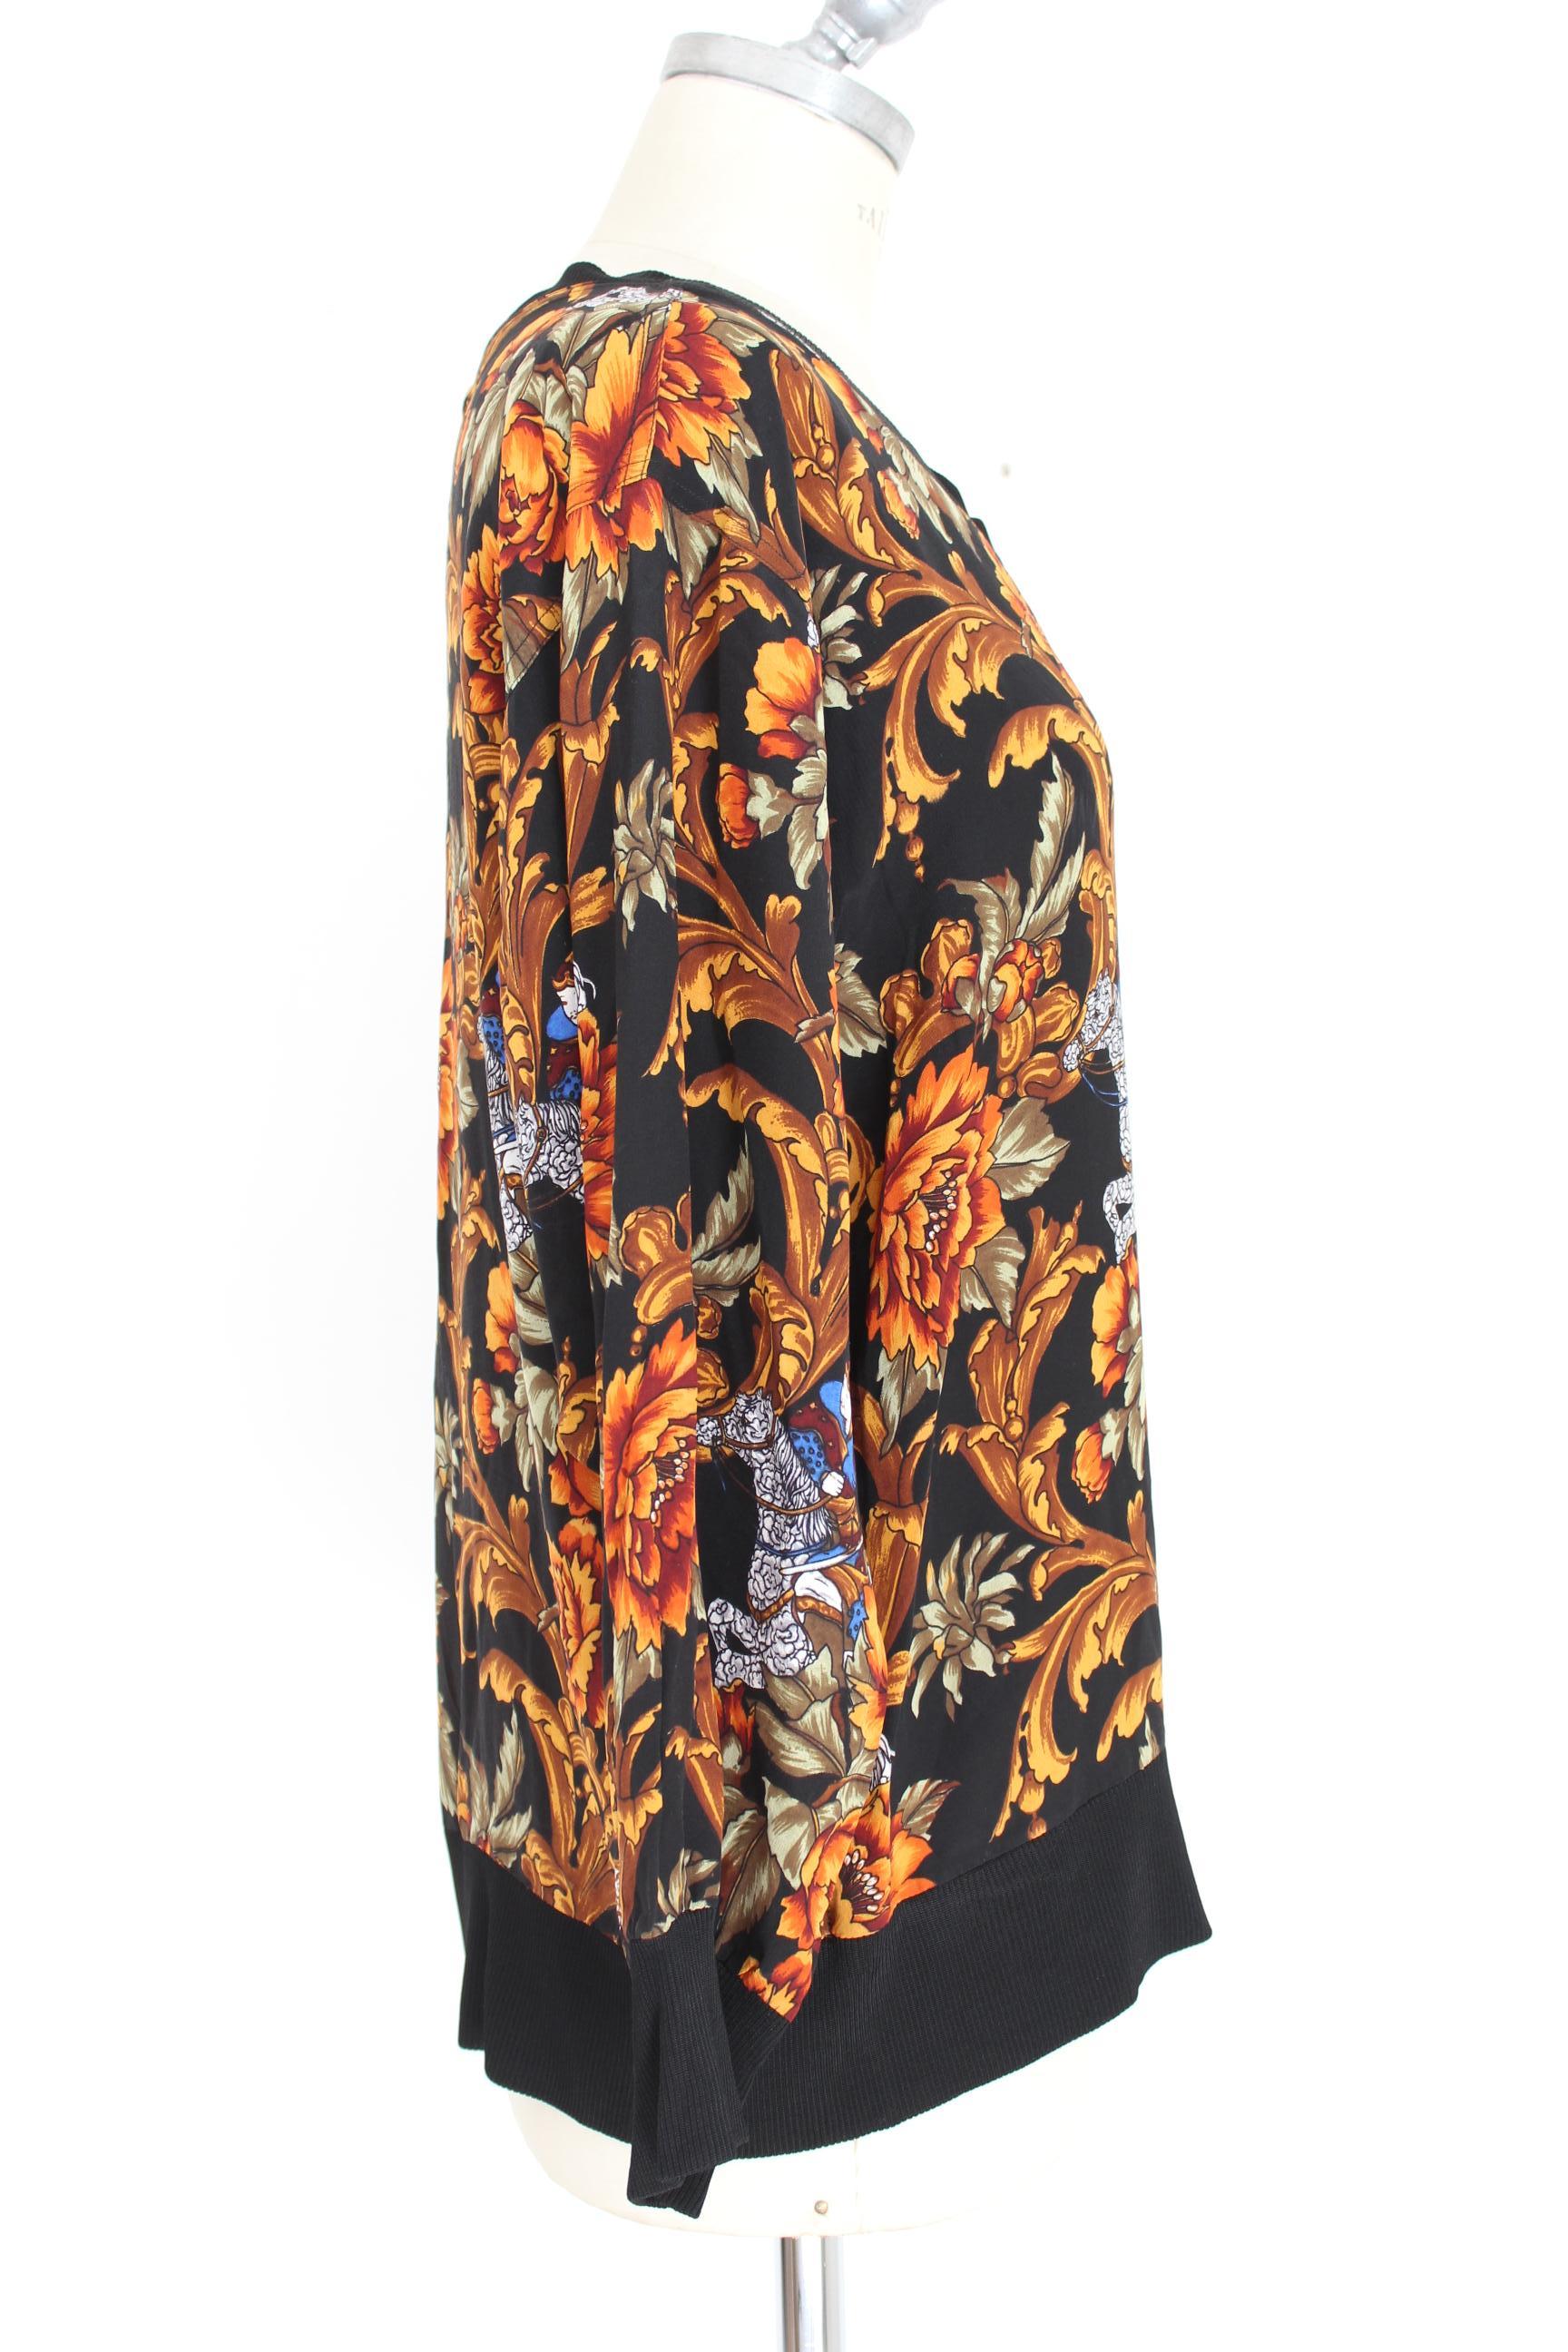 Women's Salvatore Ferragamo Black Orange Silk Floral Shirt 1990s